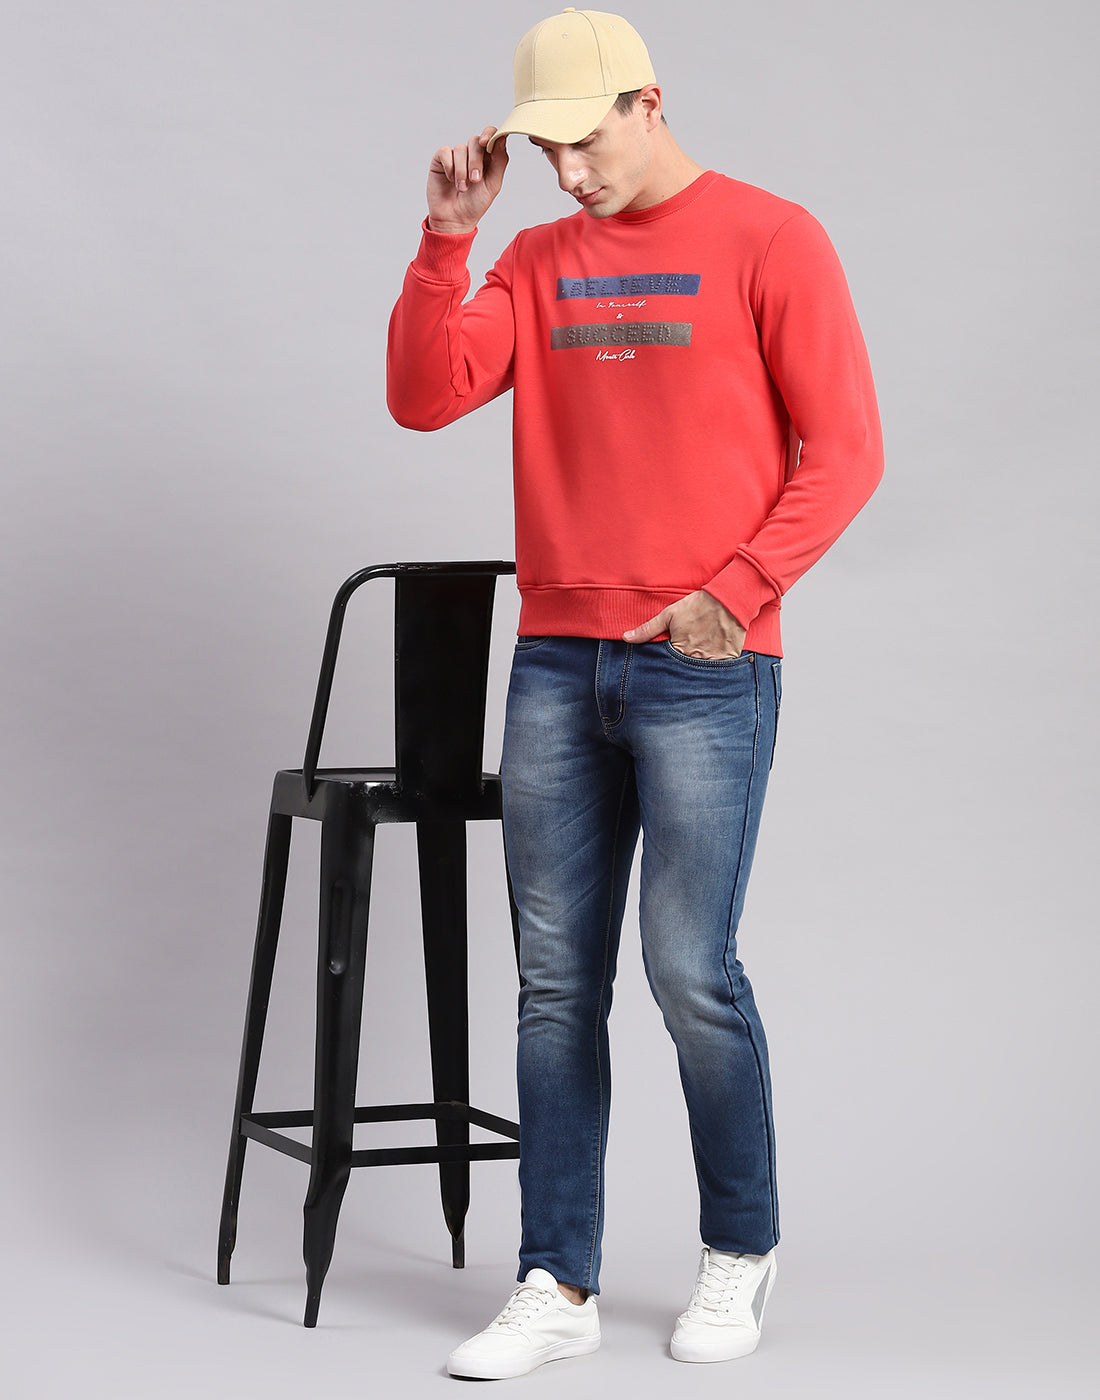 Crew Neck Sweatshirts - Buy Crew Neck Sweatshirts online in India